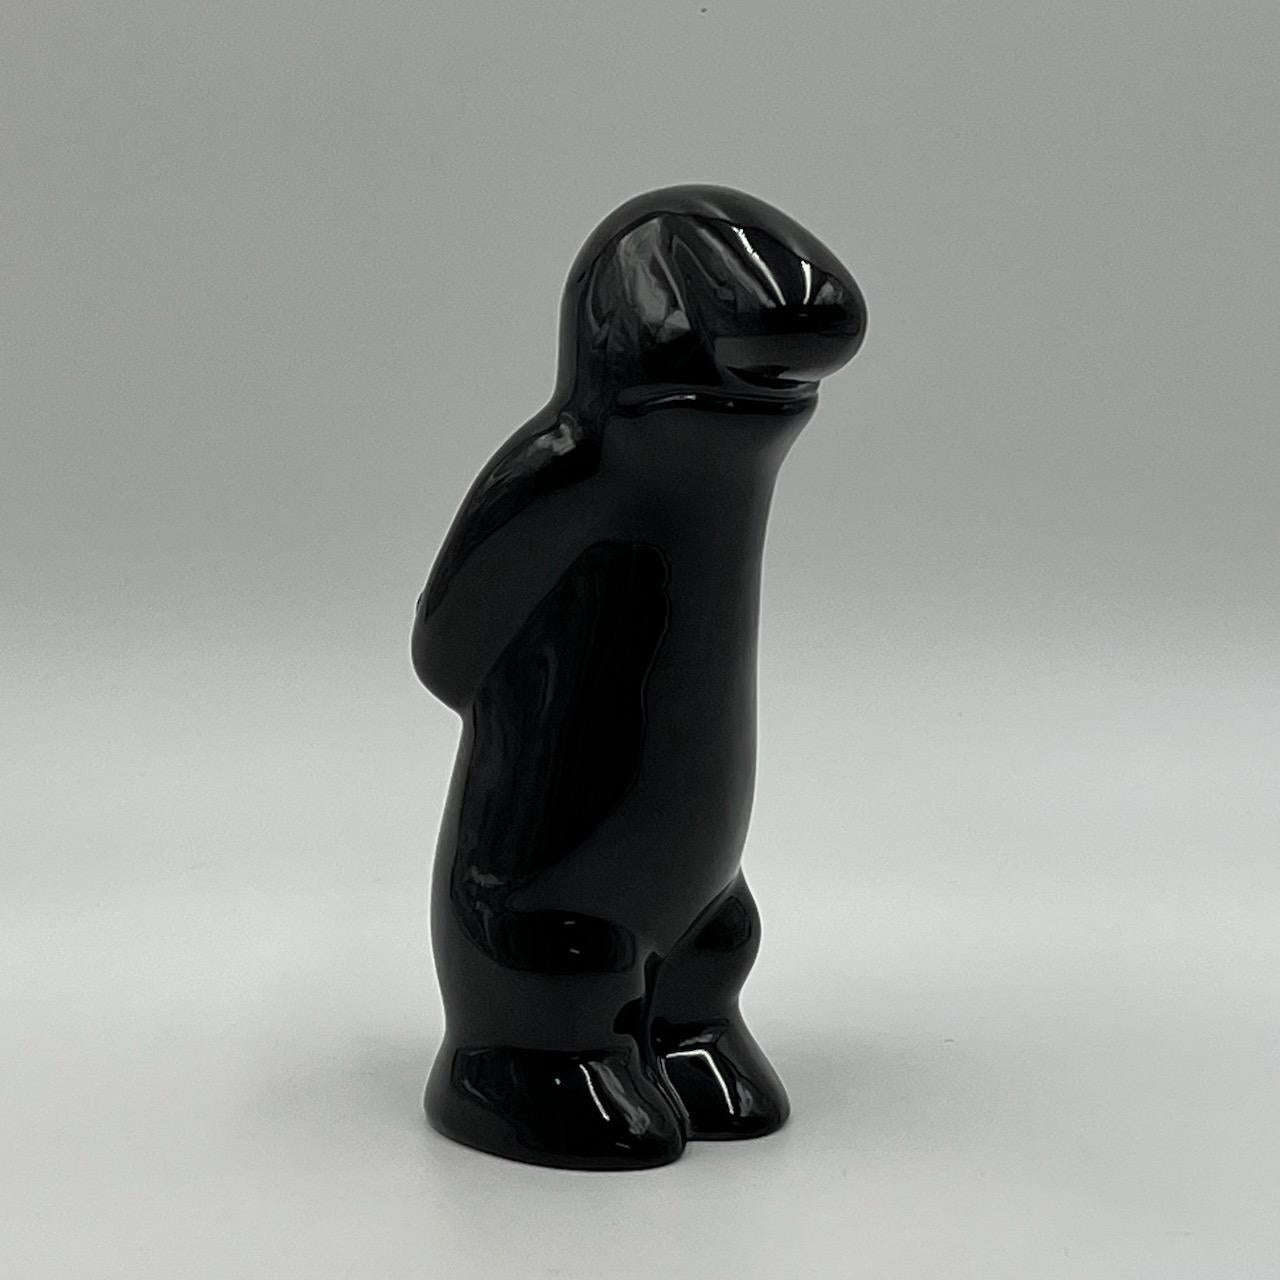 Iconic Ceramic Sculpture 'La Linea' Cavandoli - 'Brooding' Figurine, 1960s For Sale 5